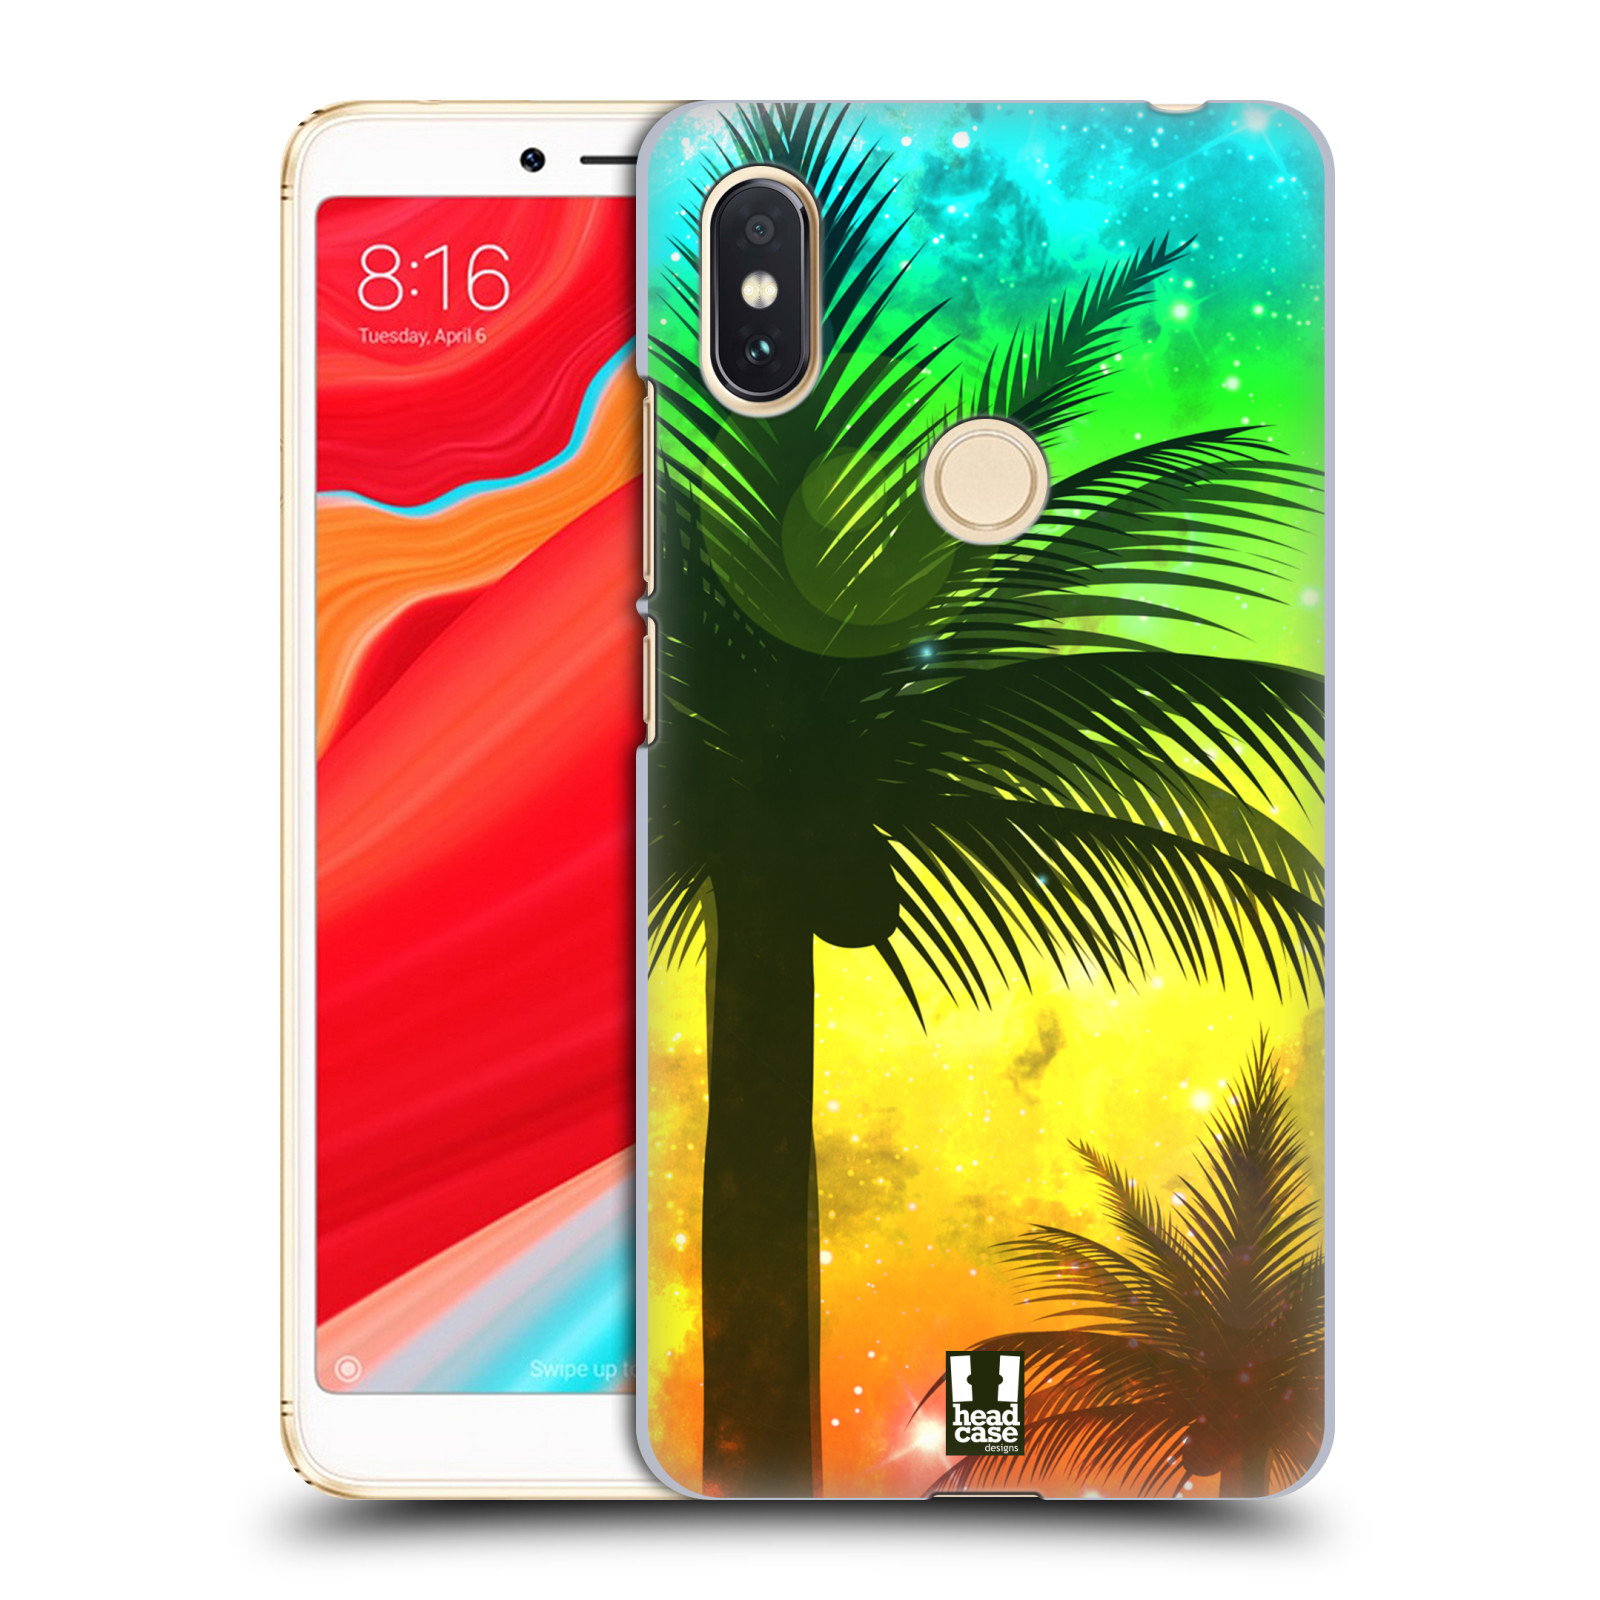 HEAD CASE plastový obal na mobil Xiaomi Redmi S2 vzor Kreslený motiv silueta moře a palmy ZELENÁ A ORANŽOVÁ